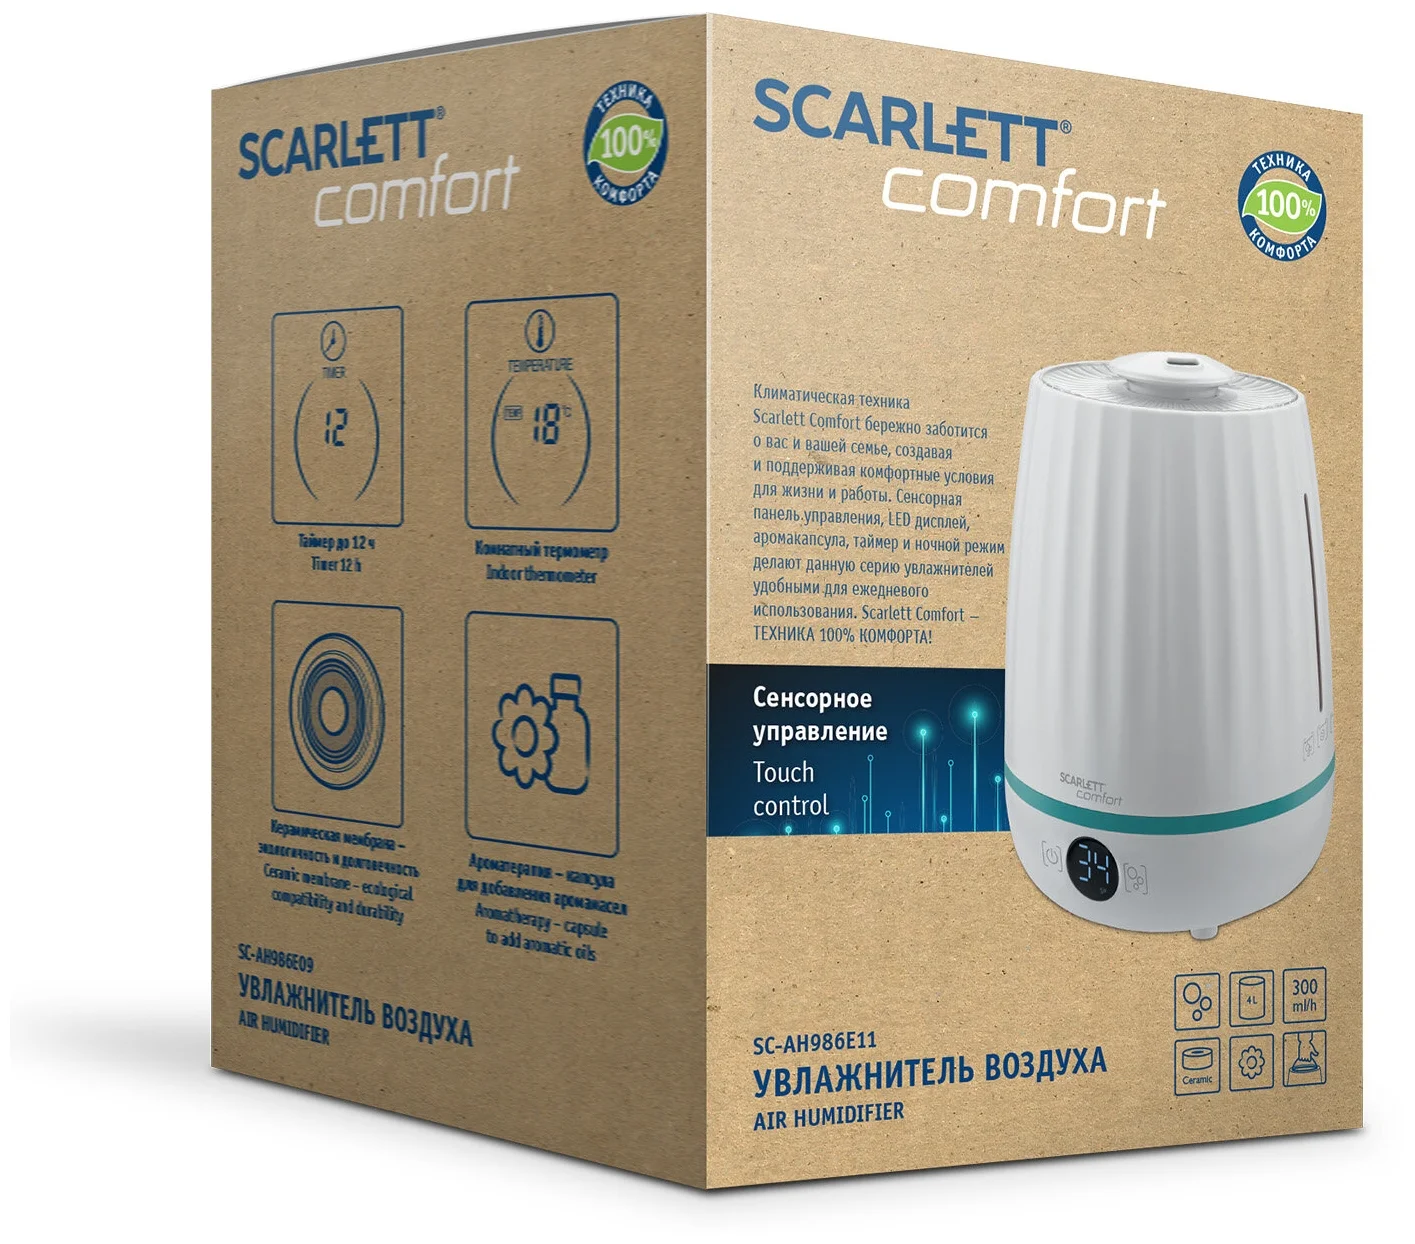 Scarlett SC-AH986E11 - дополнительные функции: ароматизация